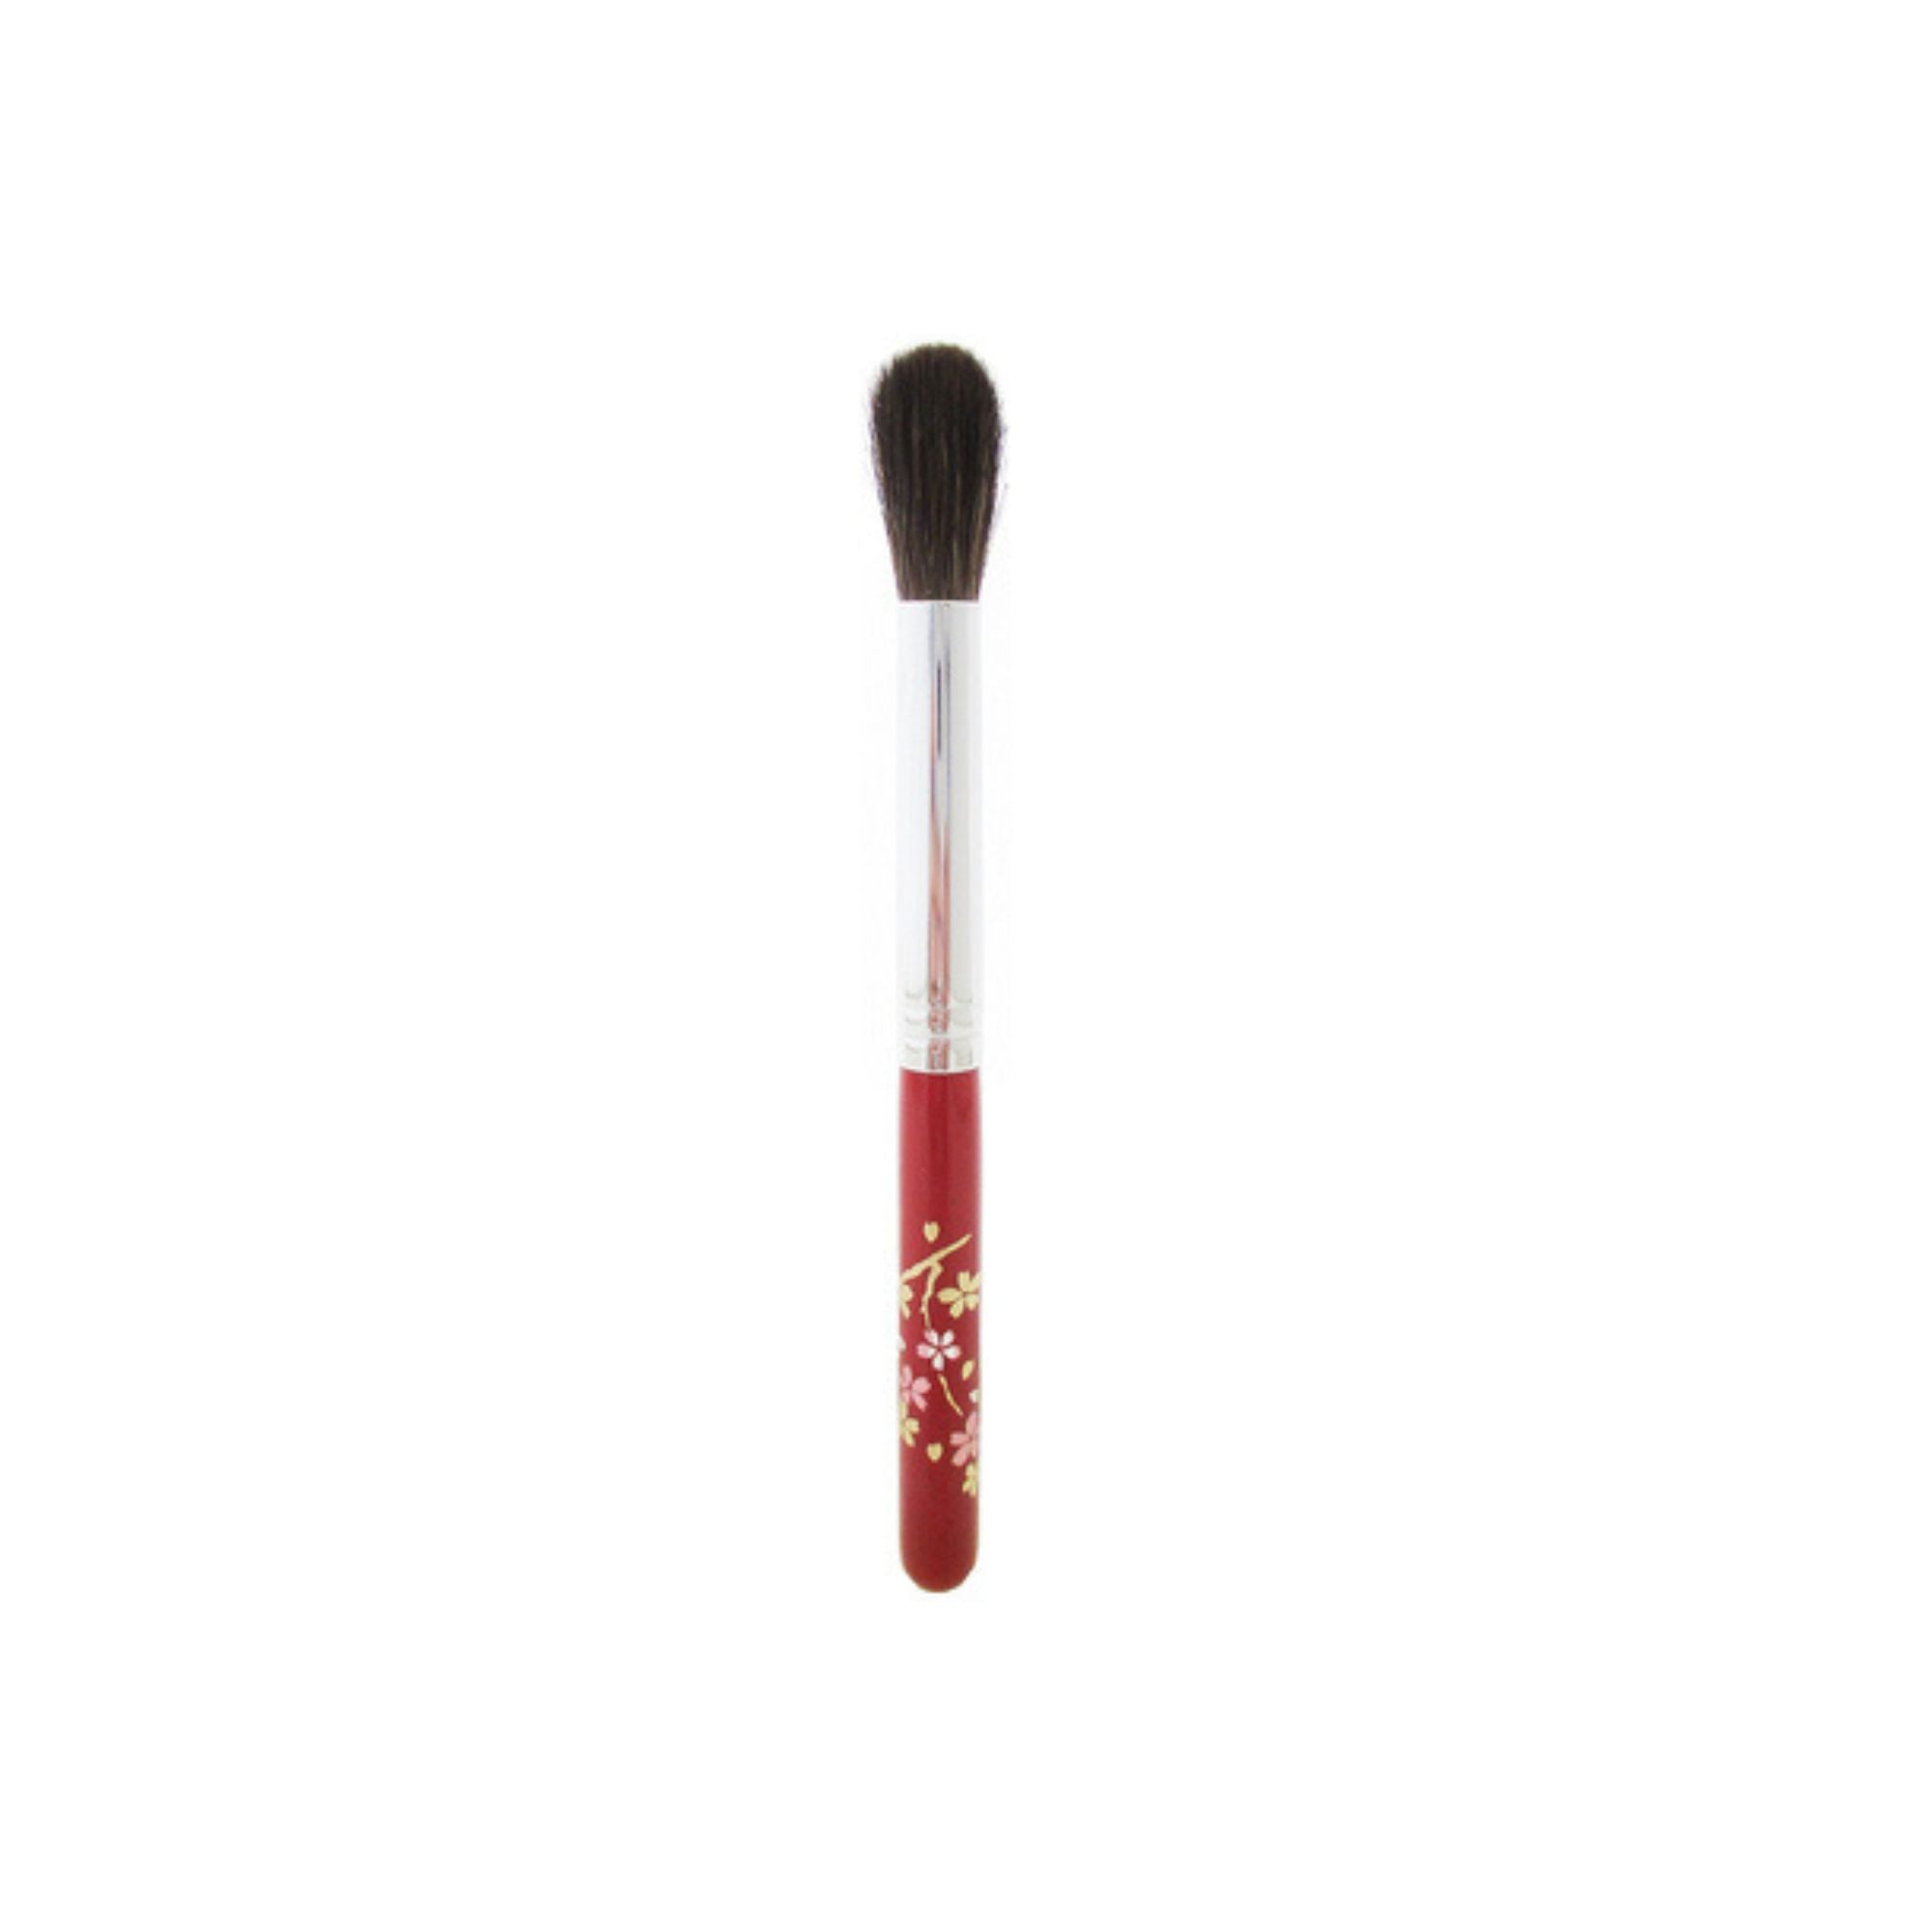 Eihodo Makie Blending Brush Sakura 小桜 – Red, Black Handles (Limited) - Fude Beauty, Japanese Makeup Brushes